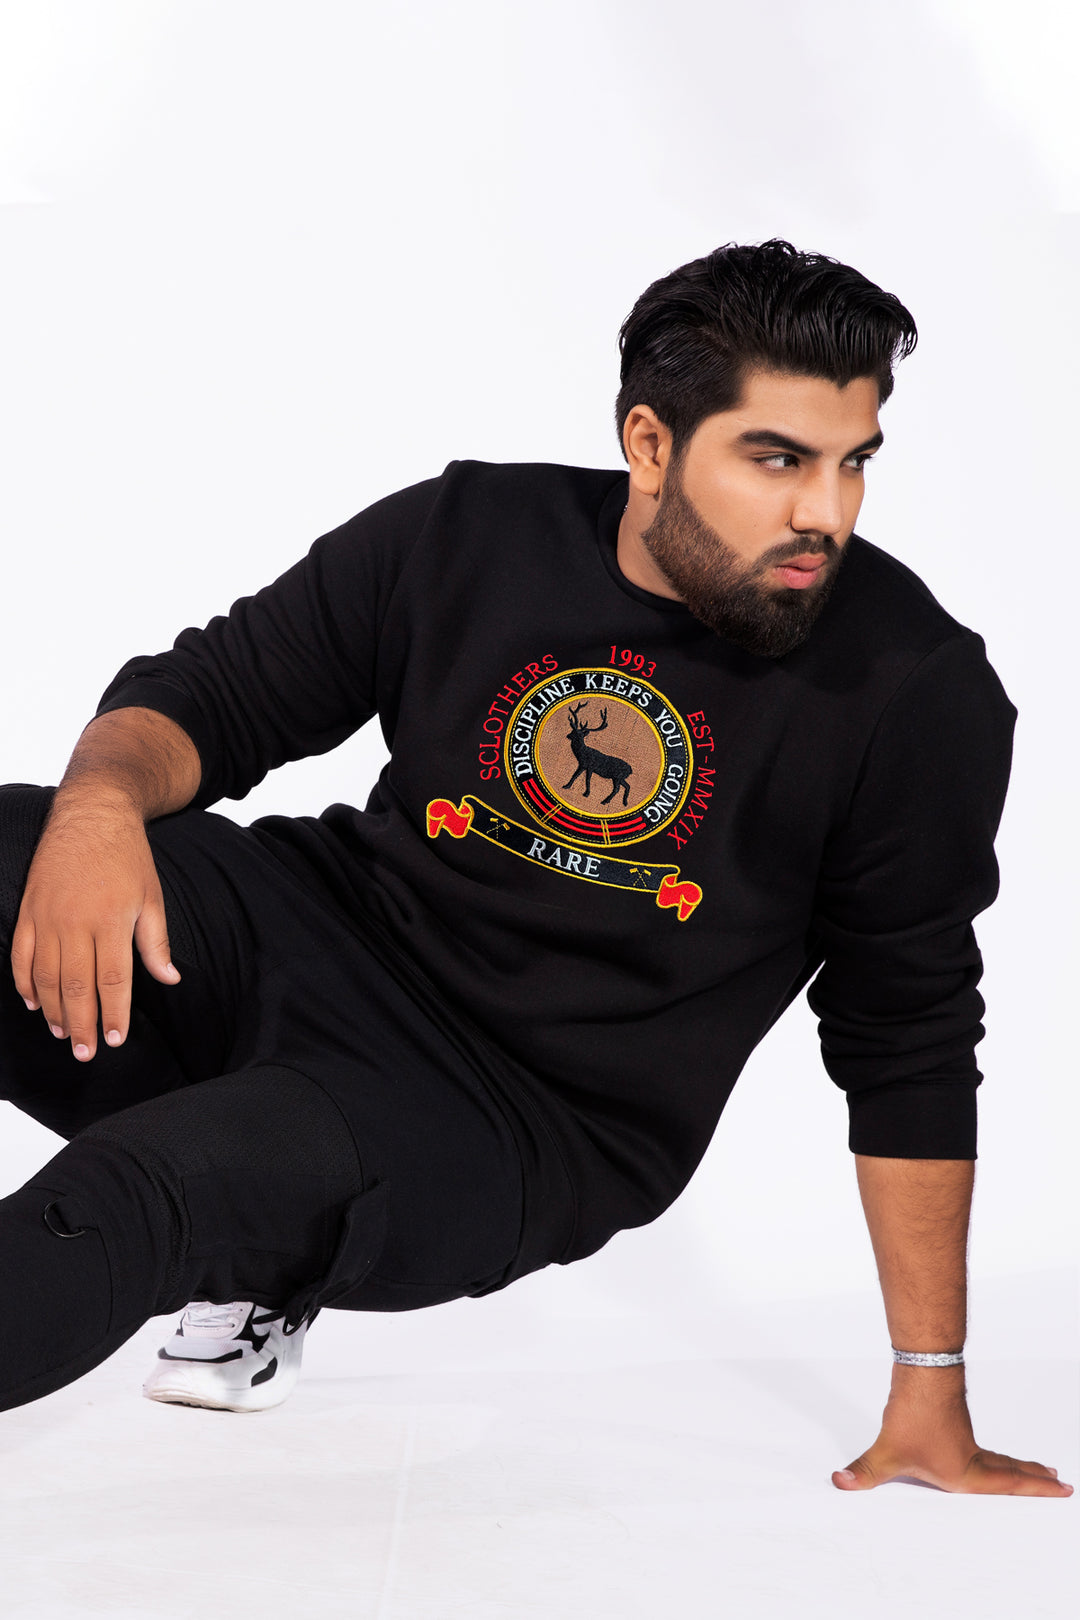 Rare Embroidered Black Sweatshirt Online in Pakistan